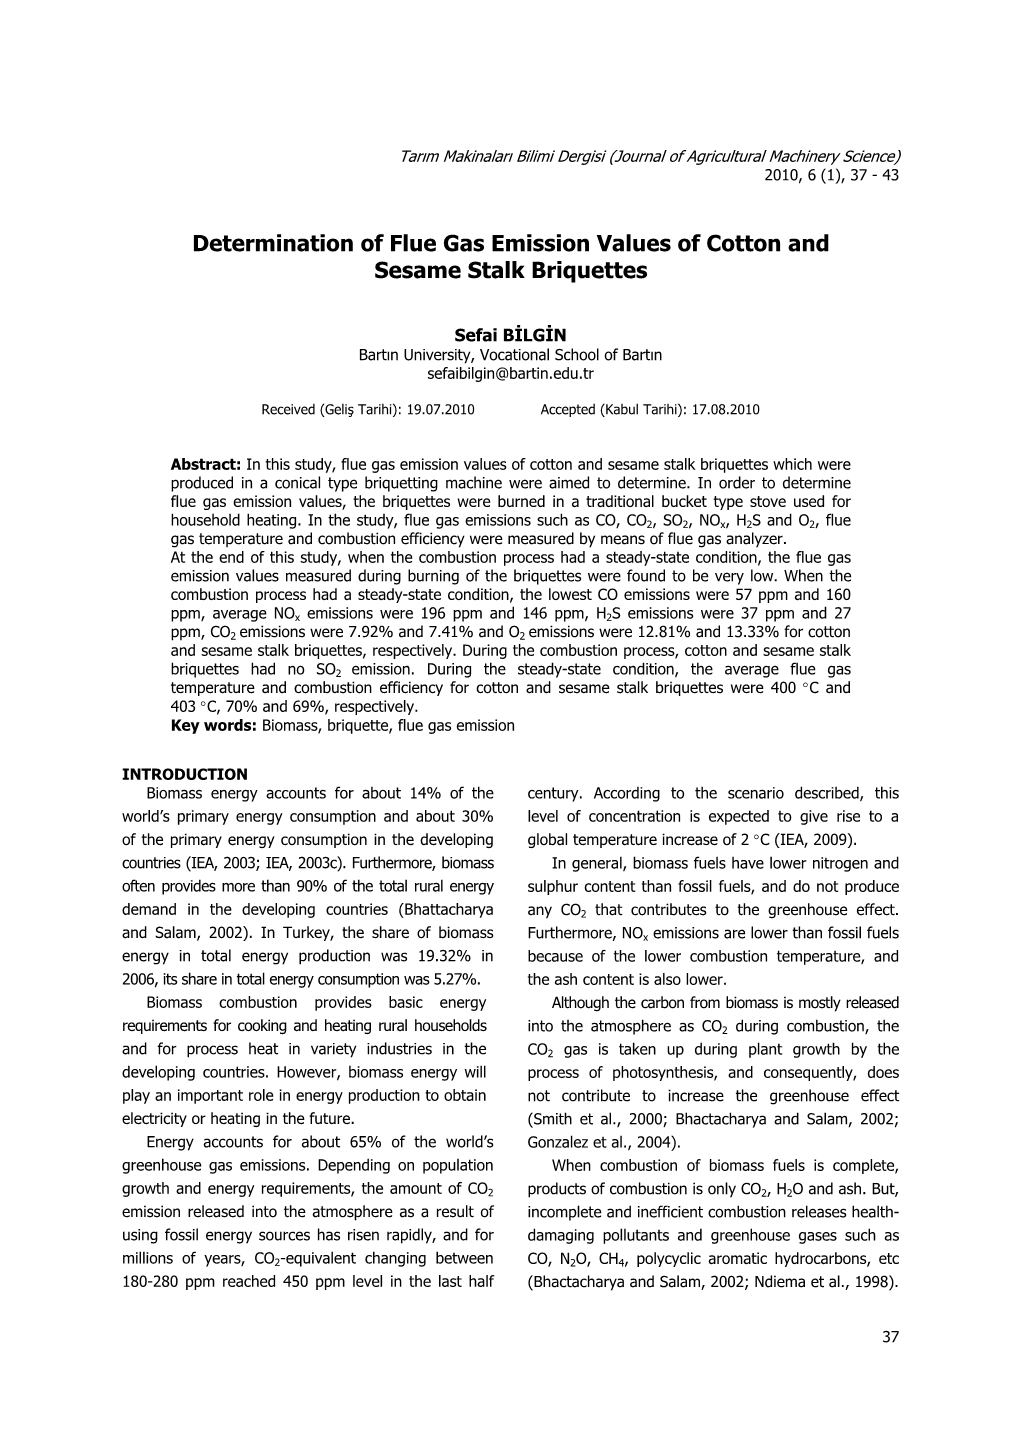 Determination of Flue Gas Emission Values of Cotton and Sesame Stalk Briquettes